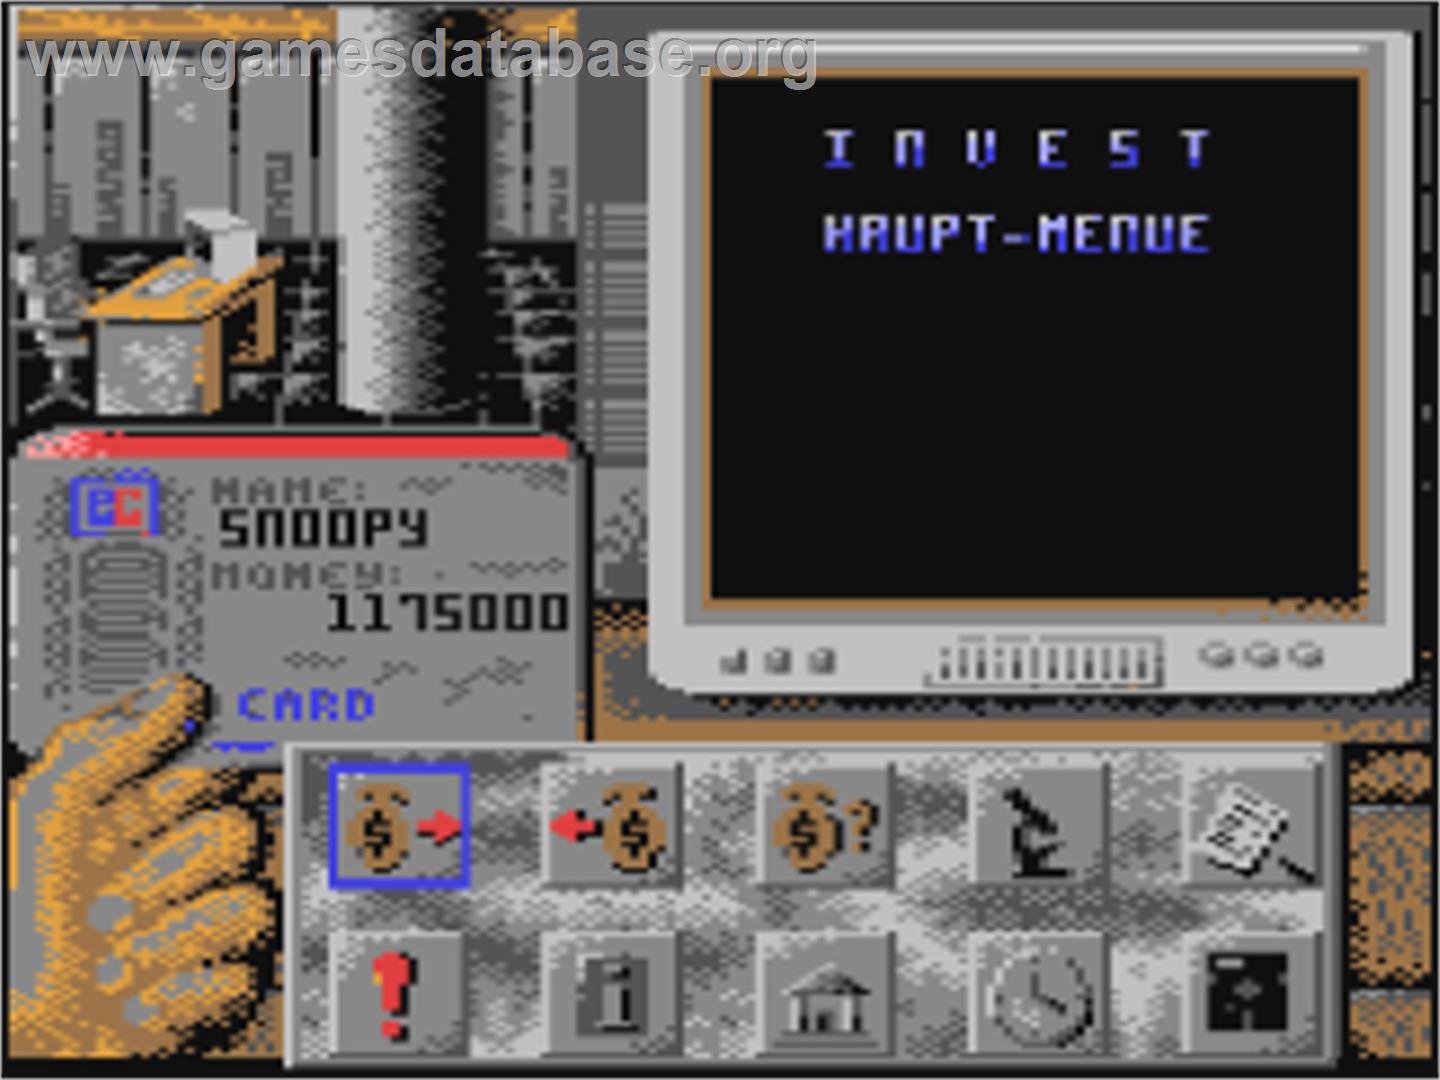 Invest - Commodore 64 - Artwork - In Game